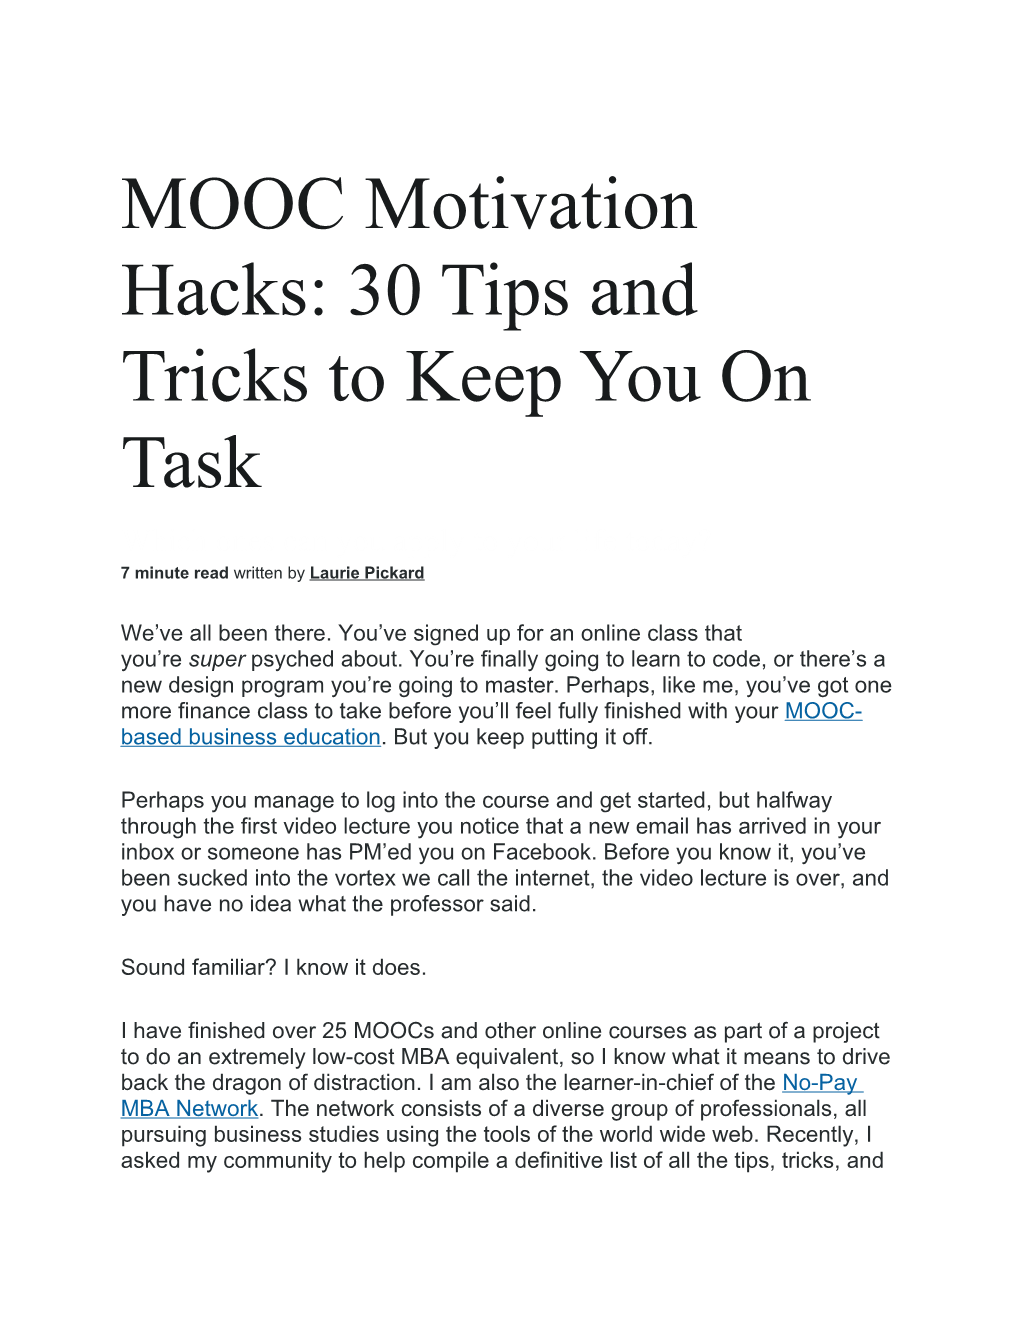 MOOC Motivation Hacks: 30 Tips and Tricks to Keep You on Task